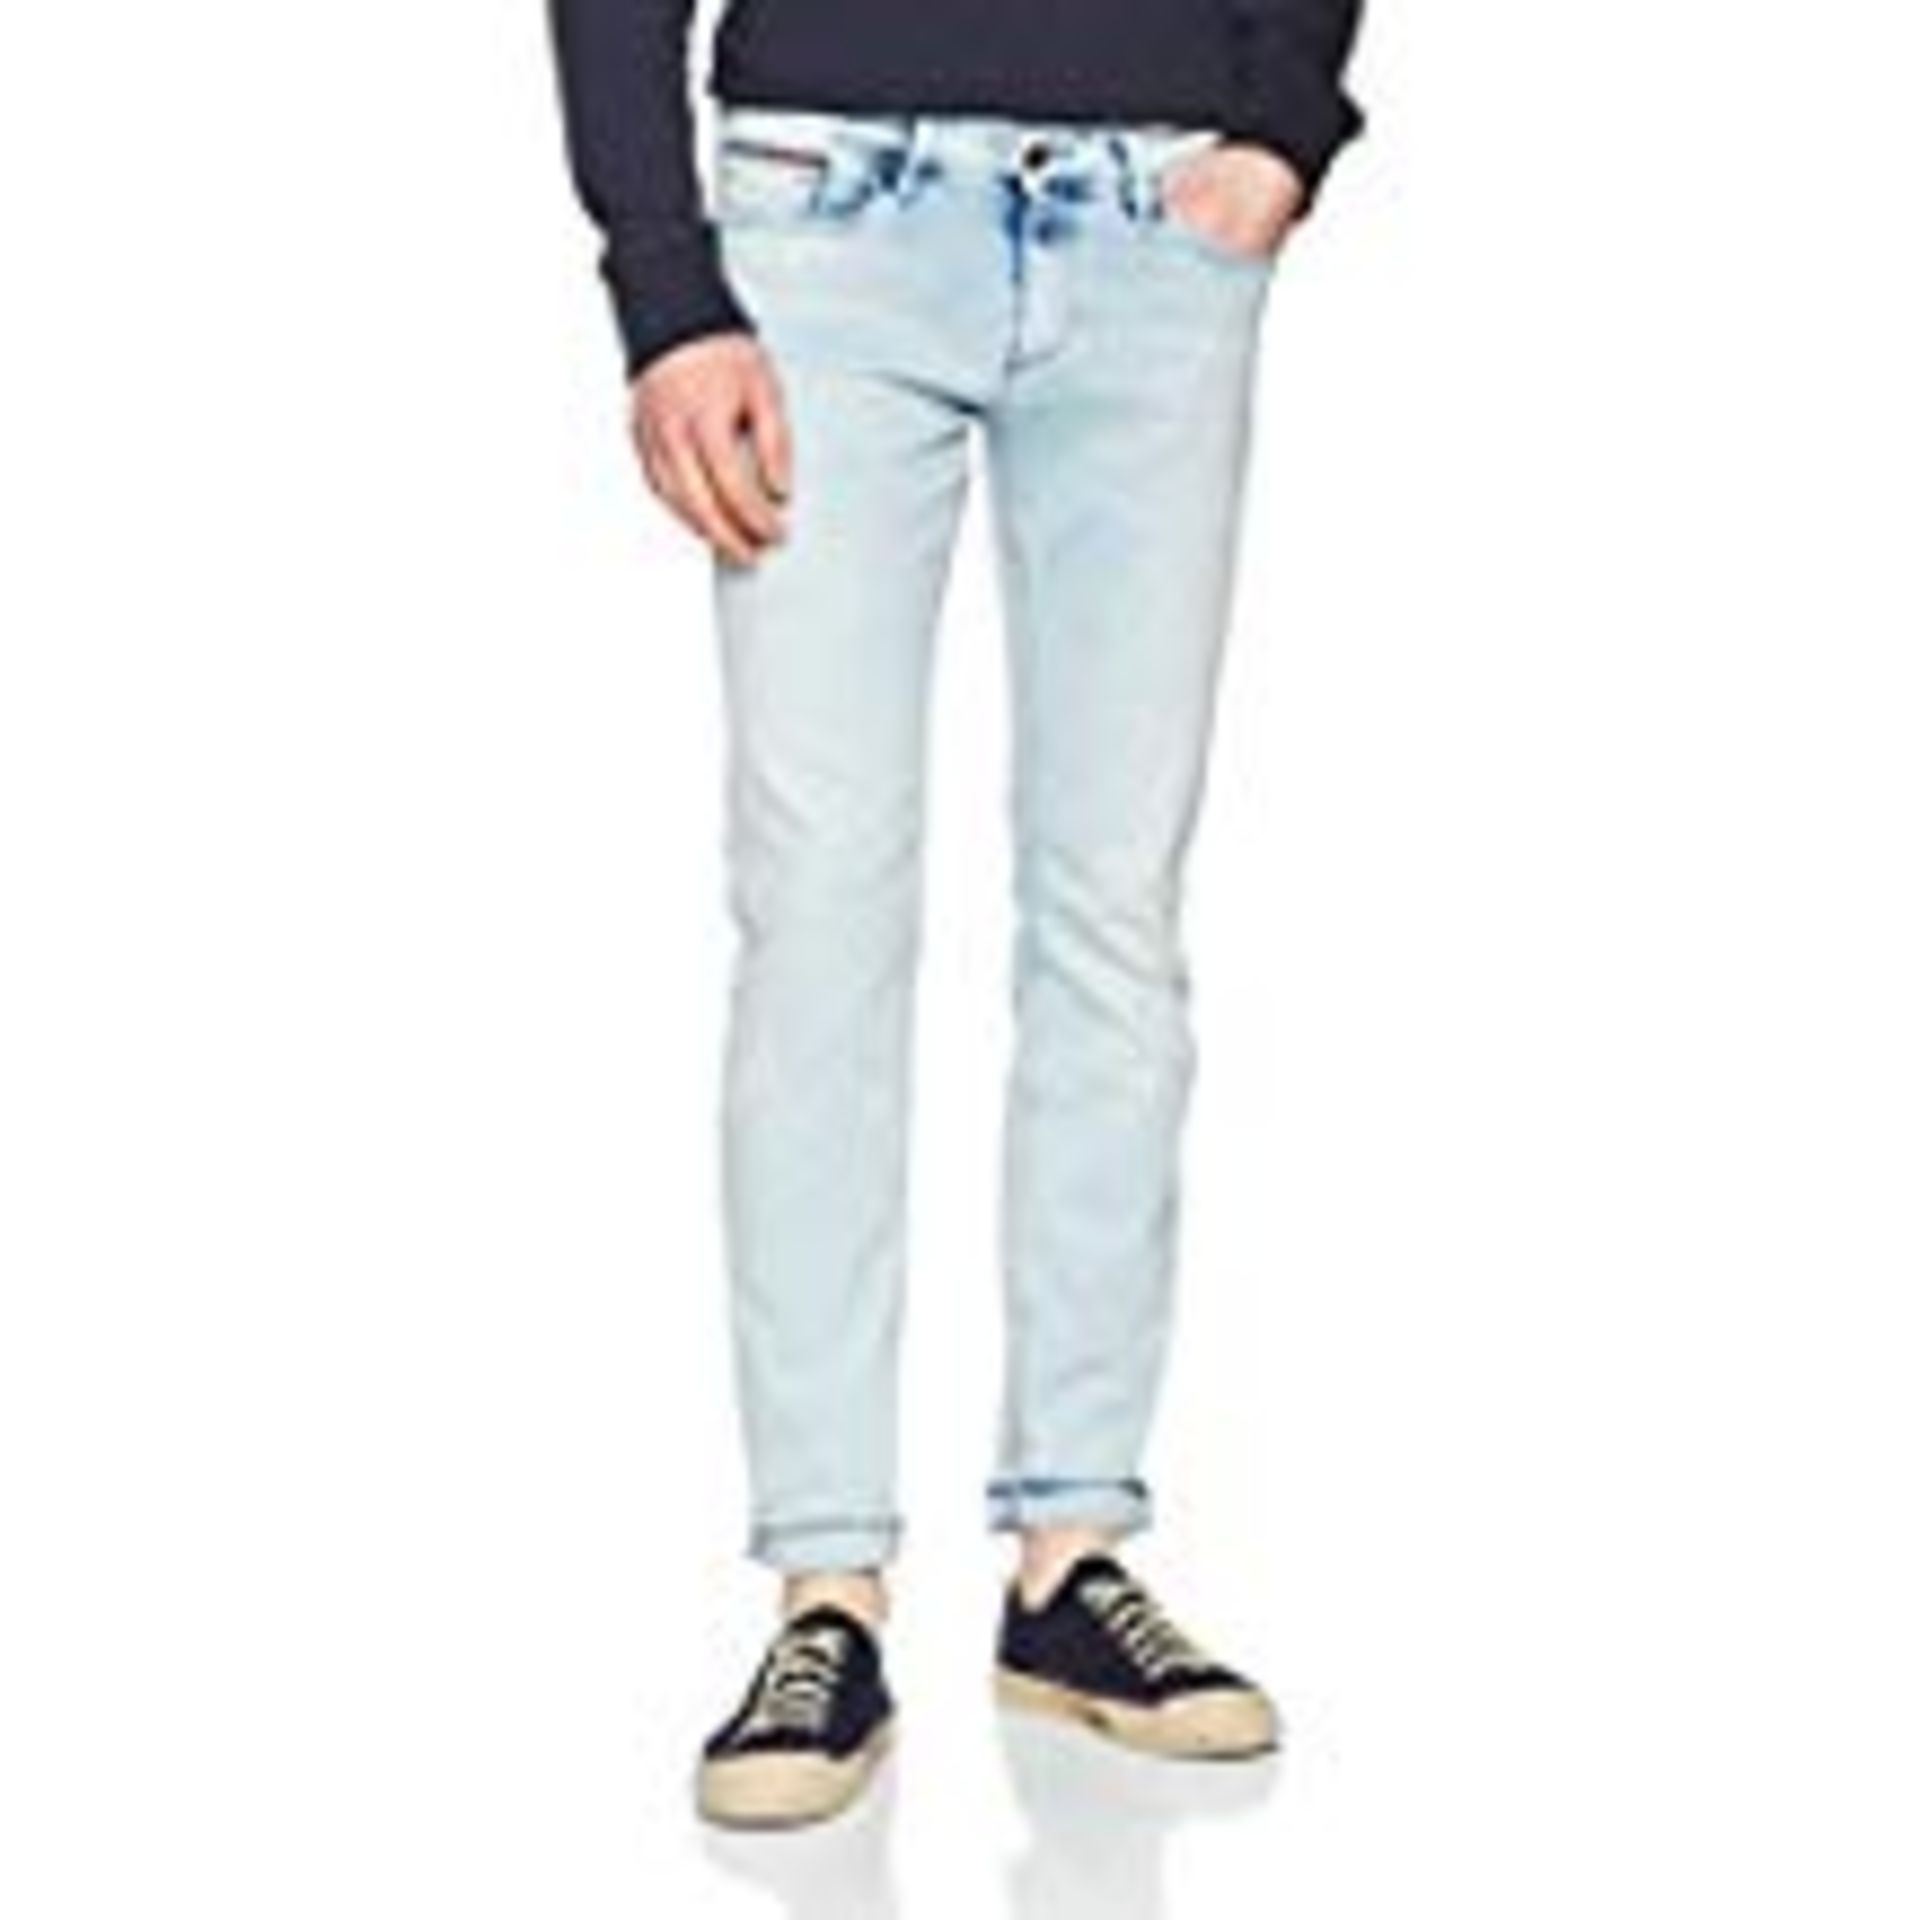 Brand new Tommy Jeans Men's Scanton Slim Jeans size 30/30